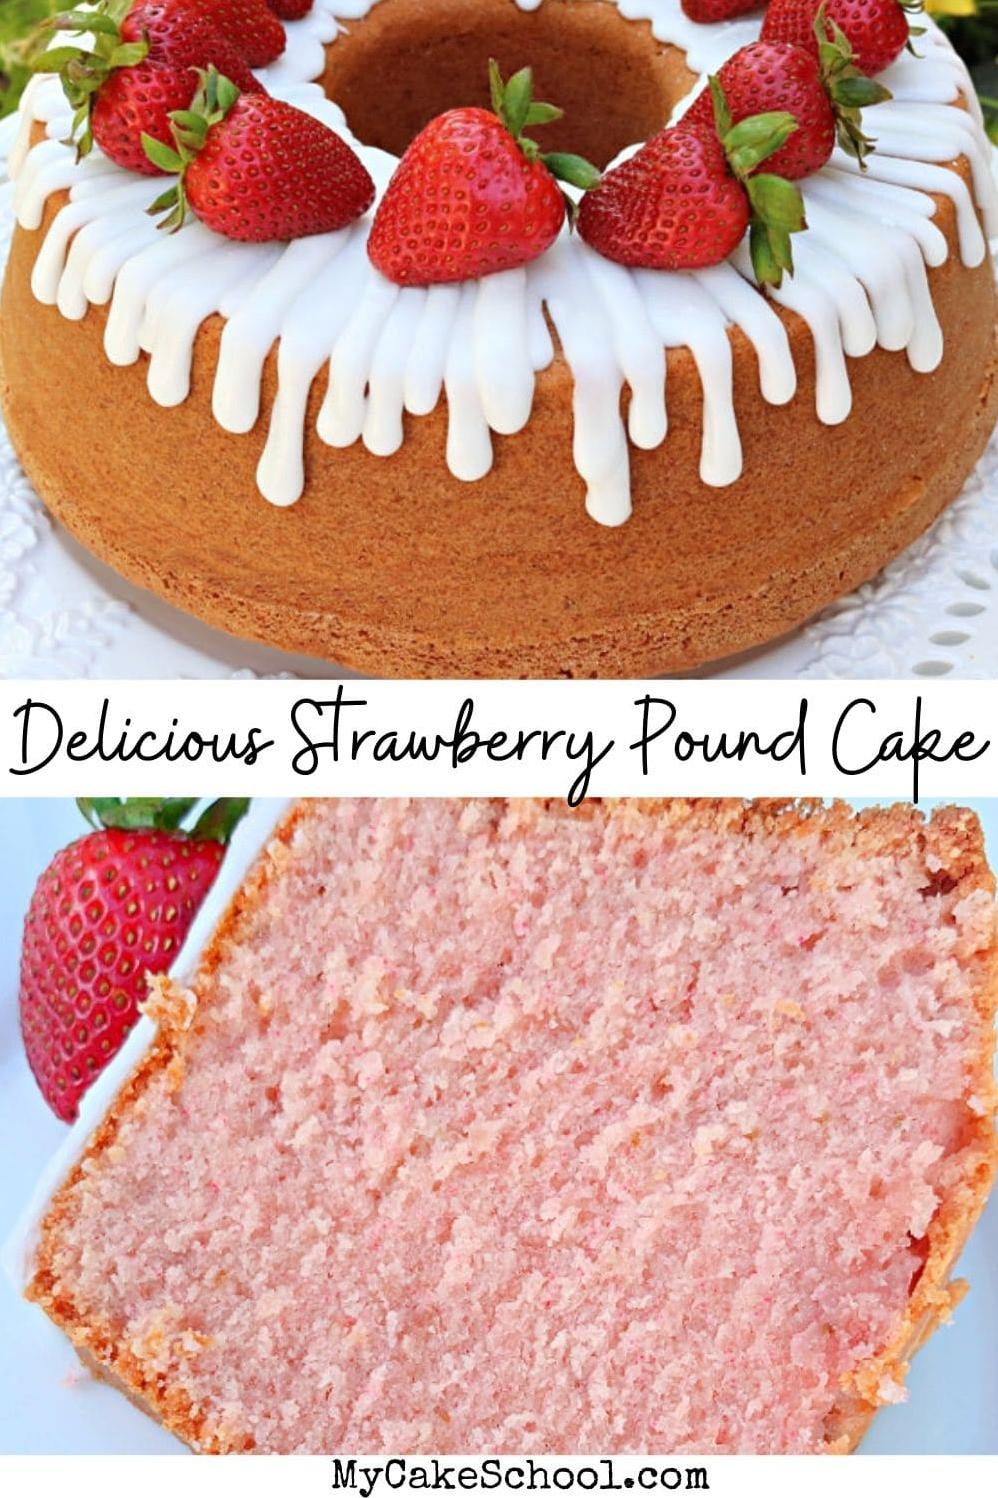  A beautiful pink surprise awaits as you cut through the cake.